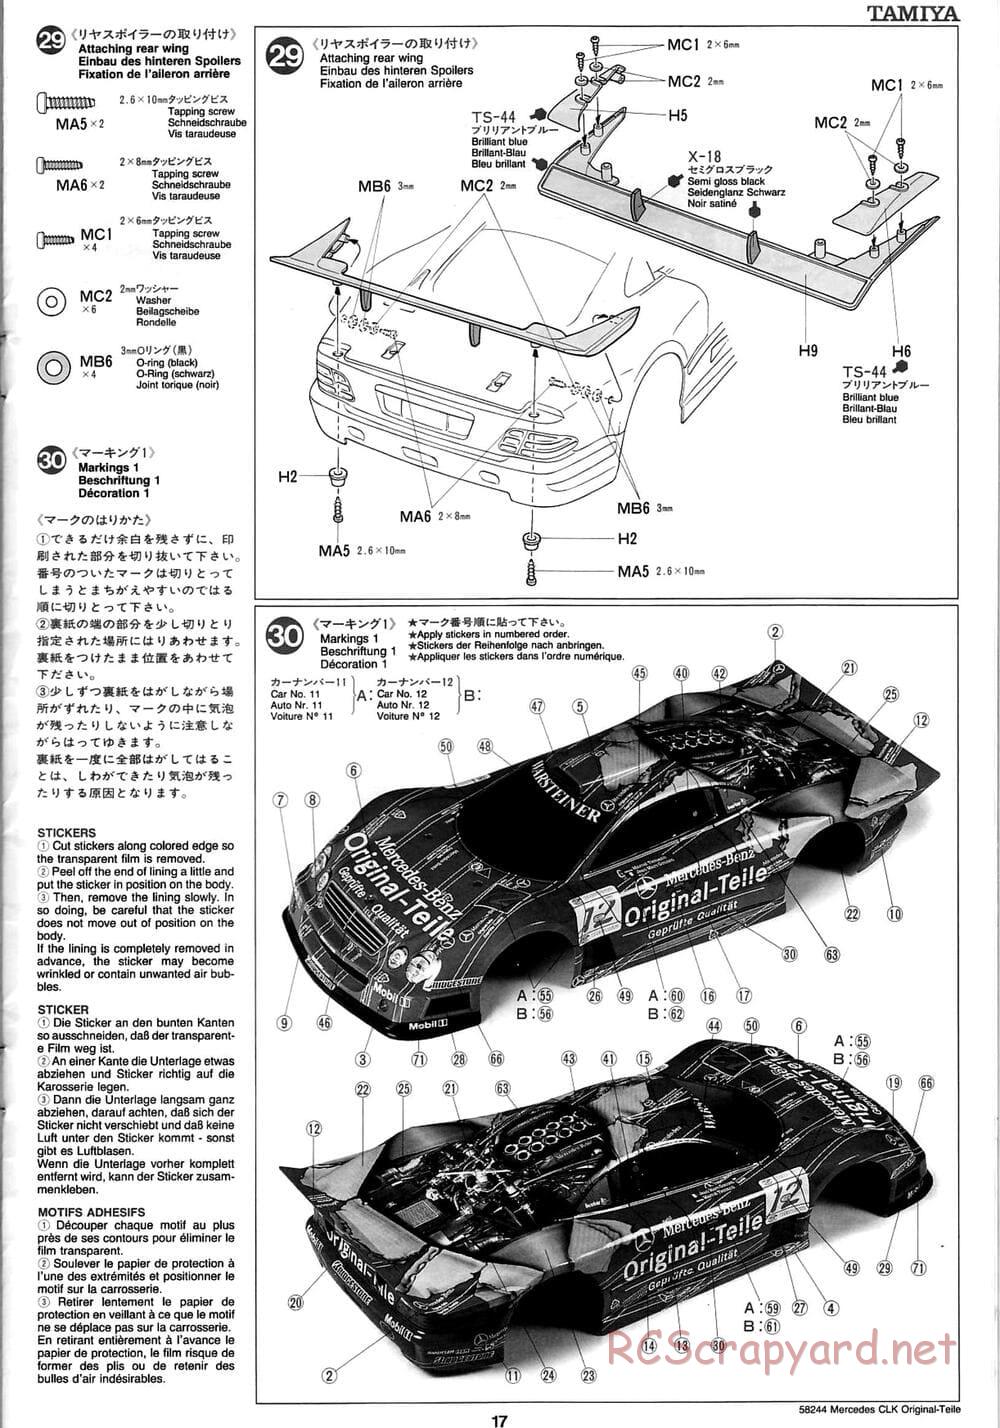 Tamiya - Mercedes CLK-GTR Original-Teile - TL-01 Chassis - Manual - Page 17